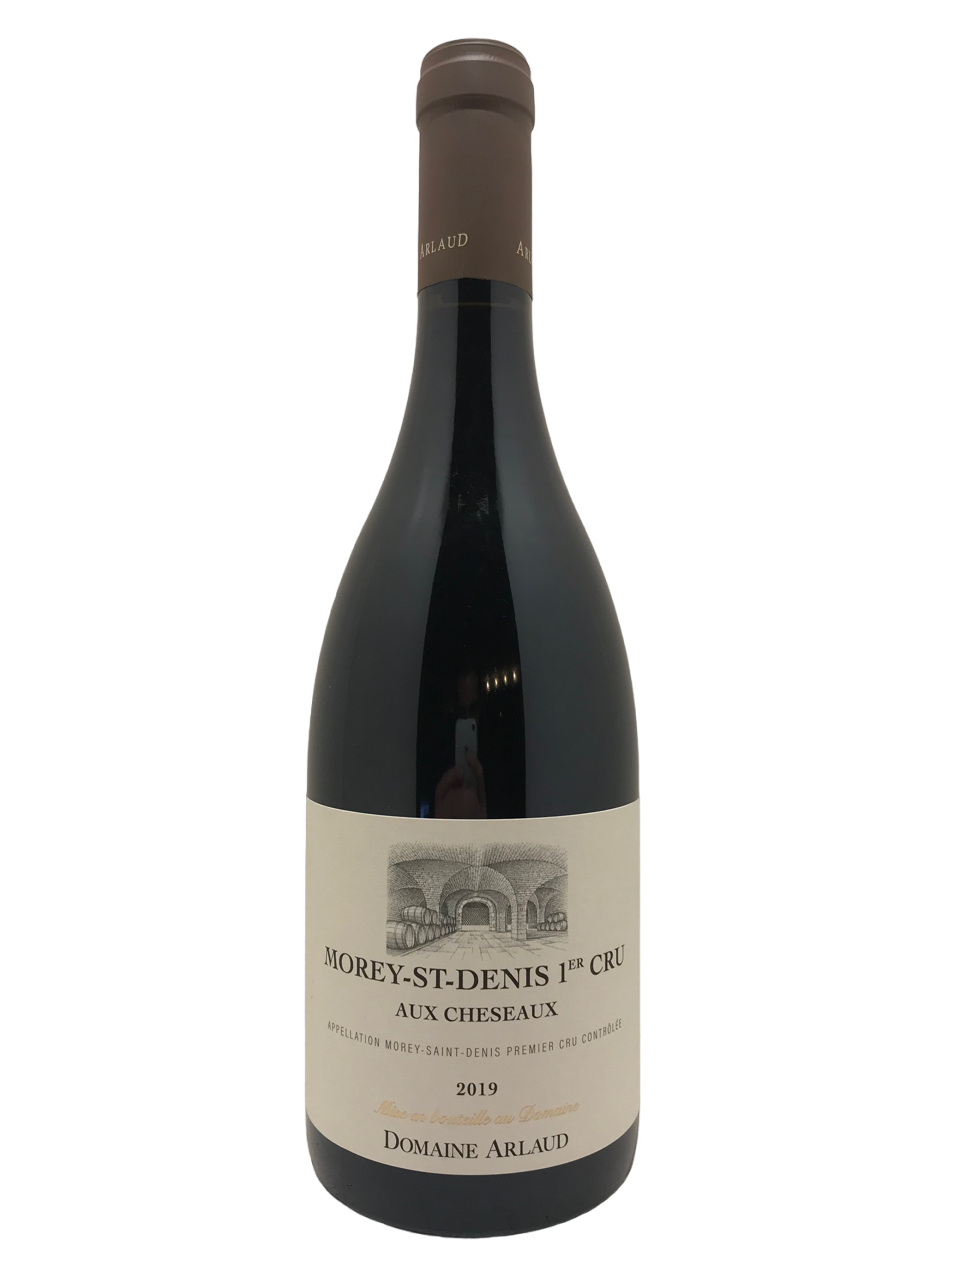 Bourgogne vin burgundy wine domaine arlaud morey-saint-denis 1er cru aux cheseaux